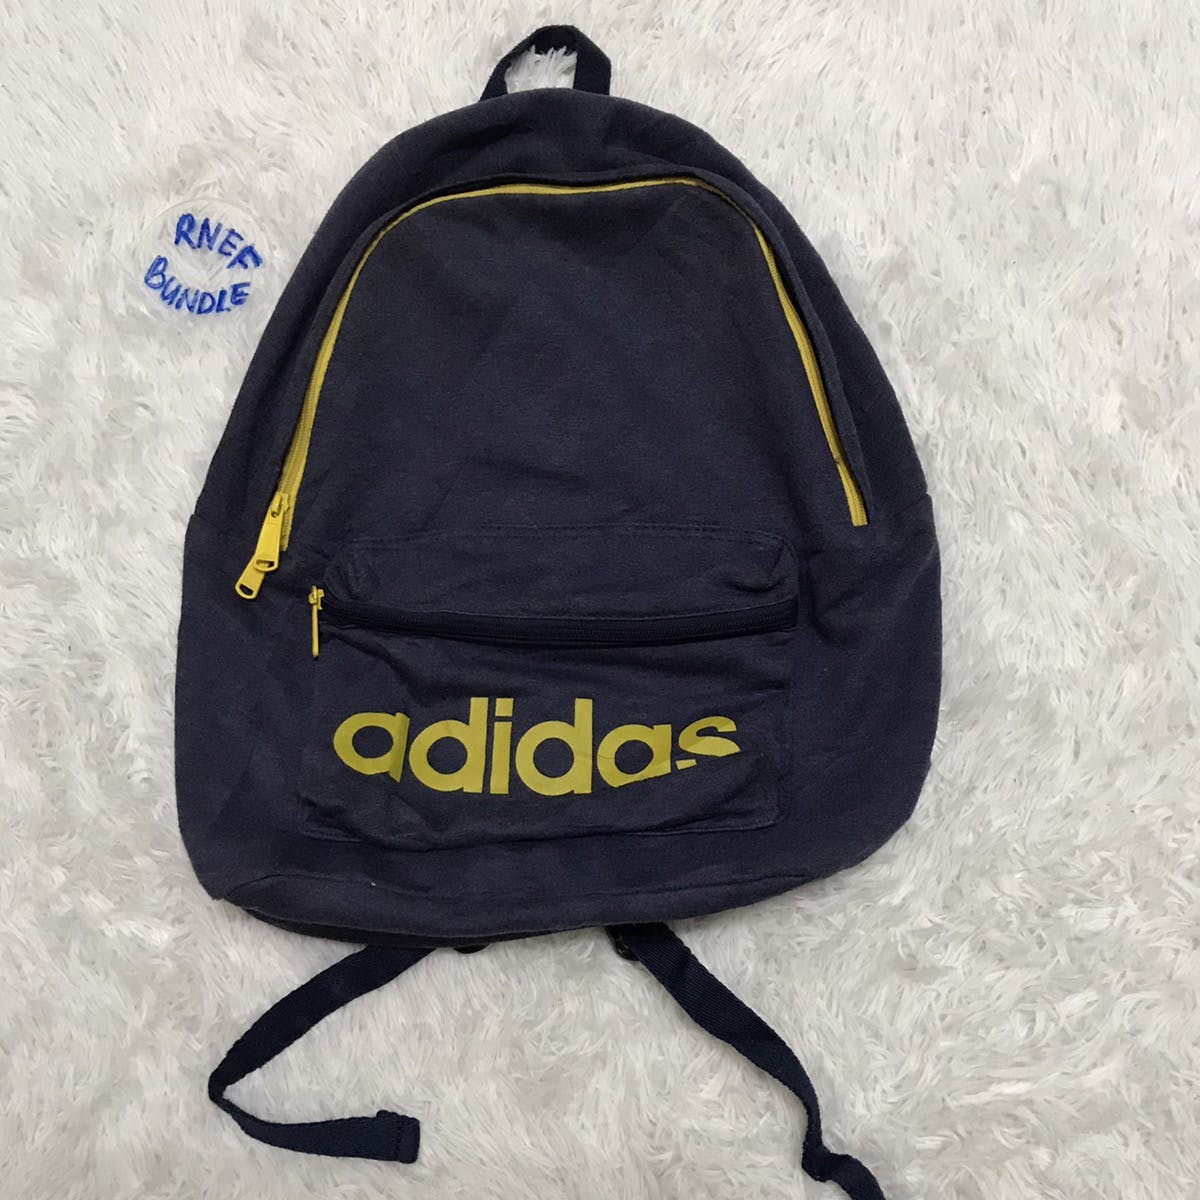 Adidas Backpack - 2